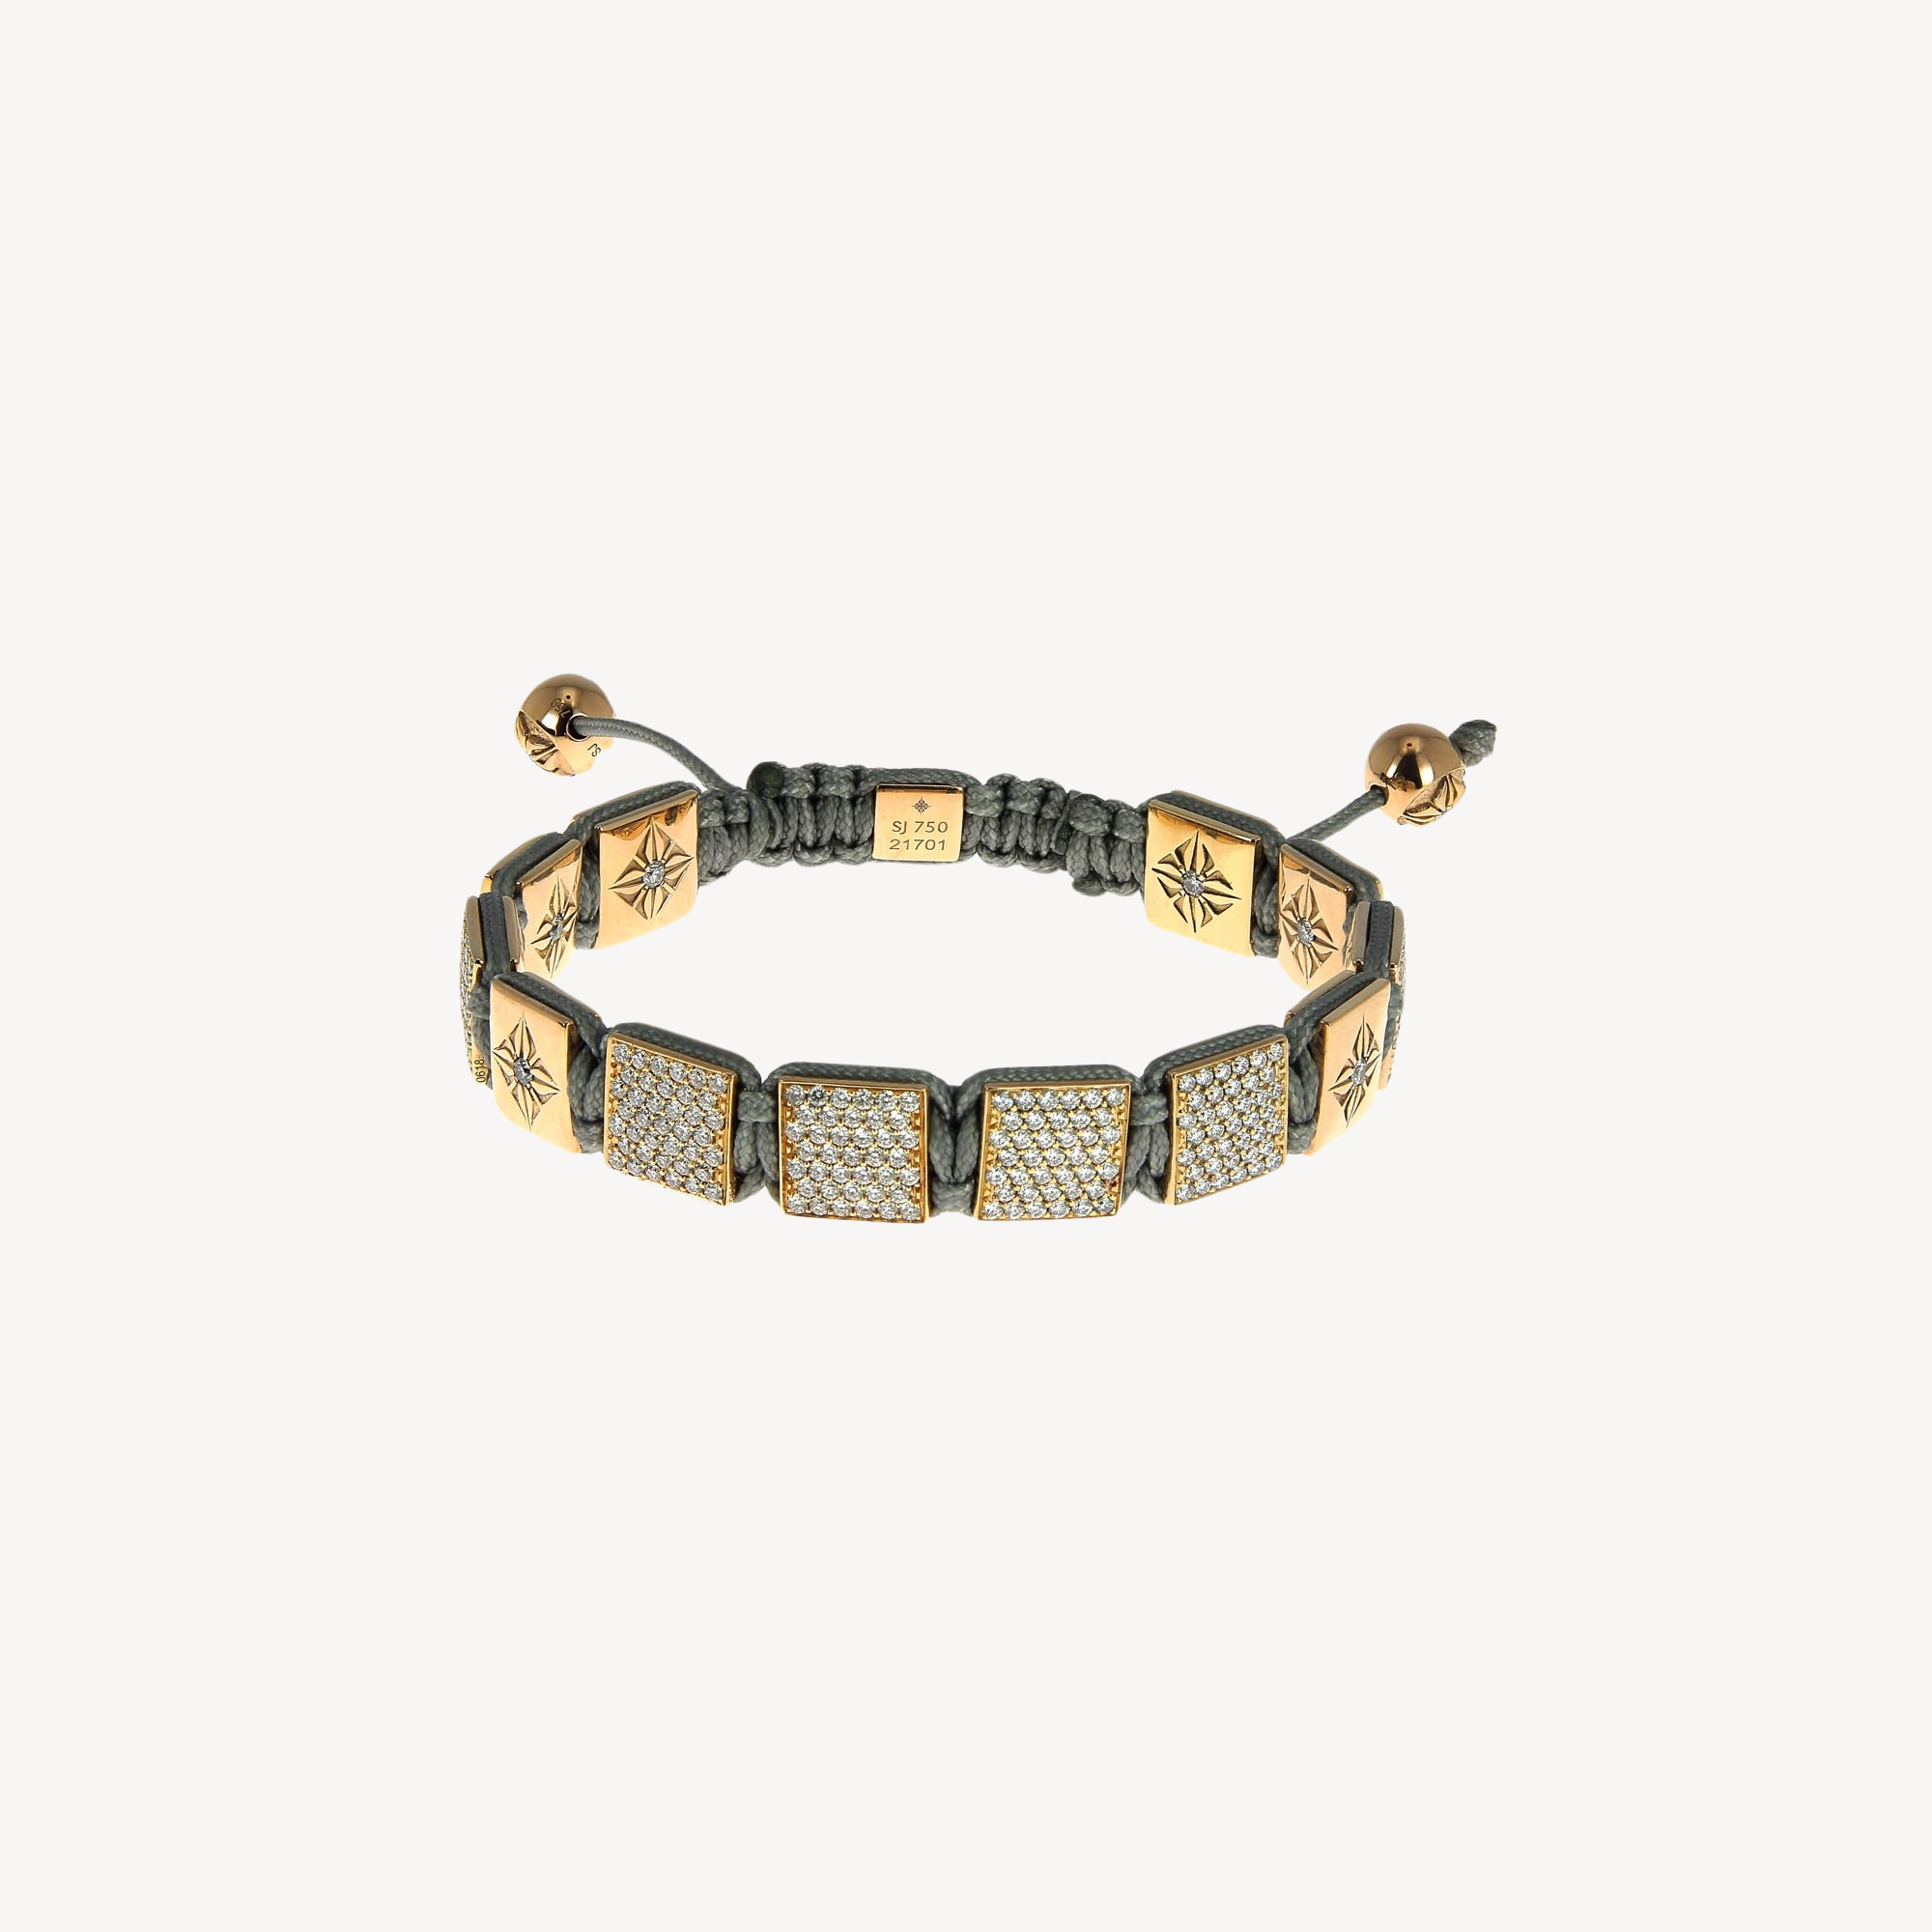 Rose gold with white diamond pave bracelet